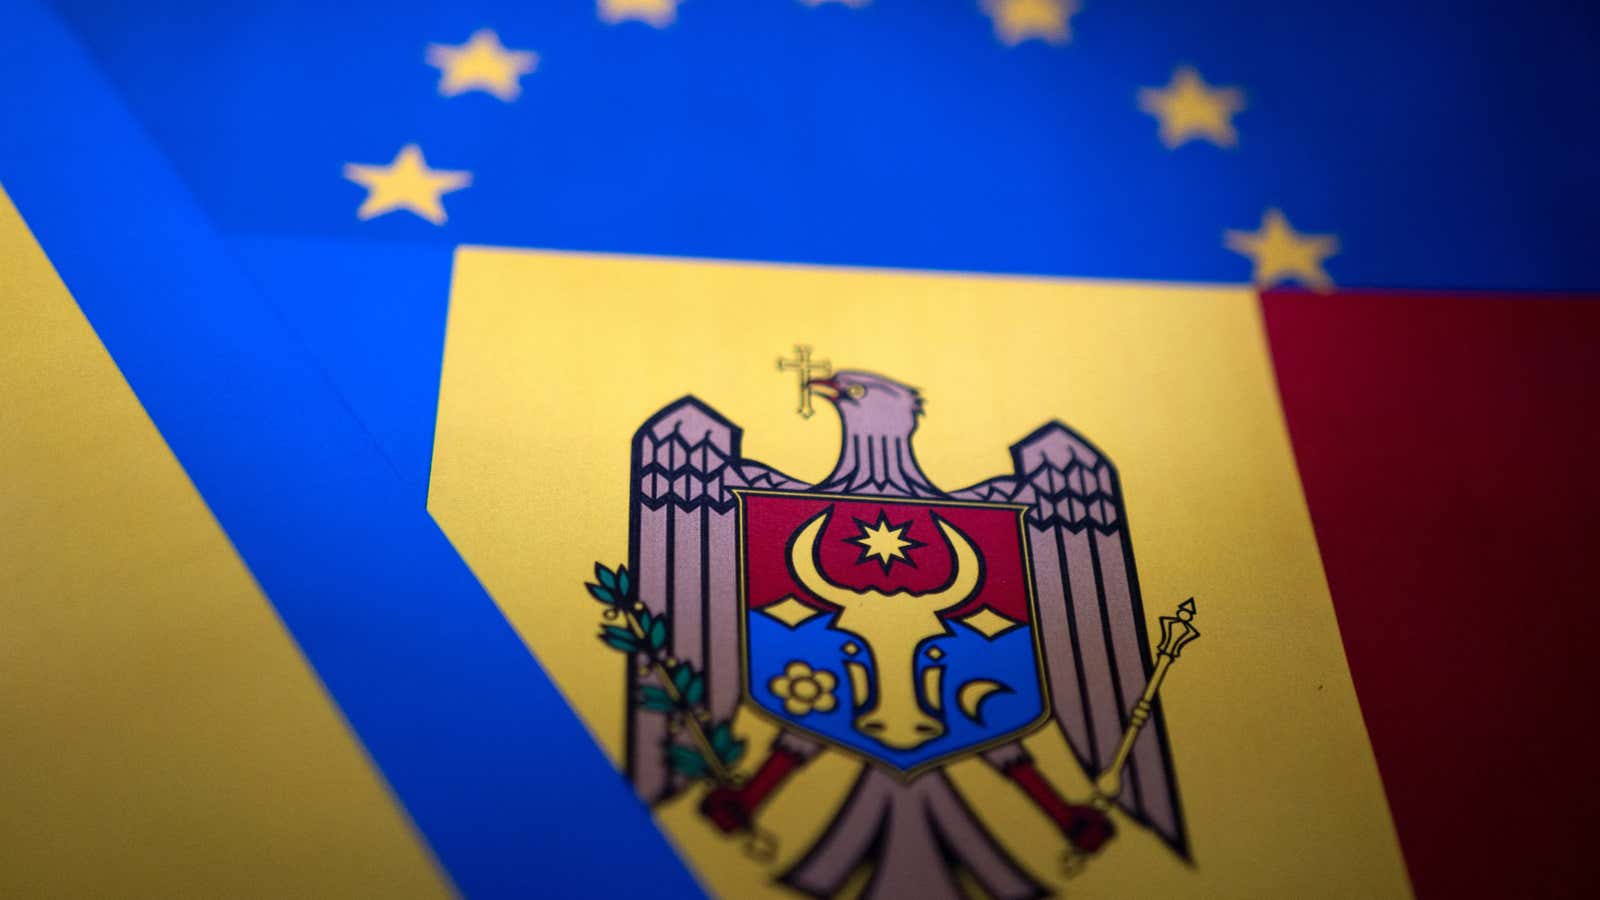 The flags of the EU, Ukraine, and Moldova.